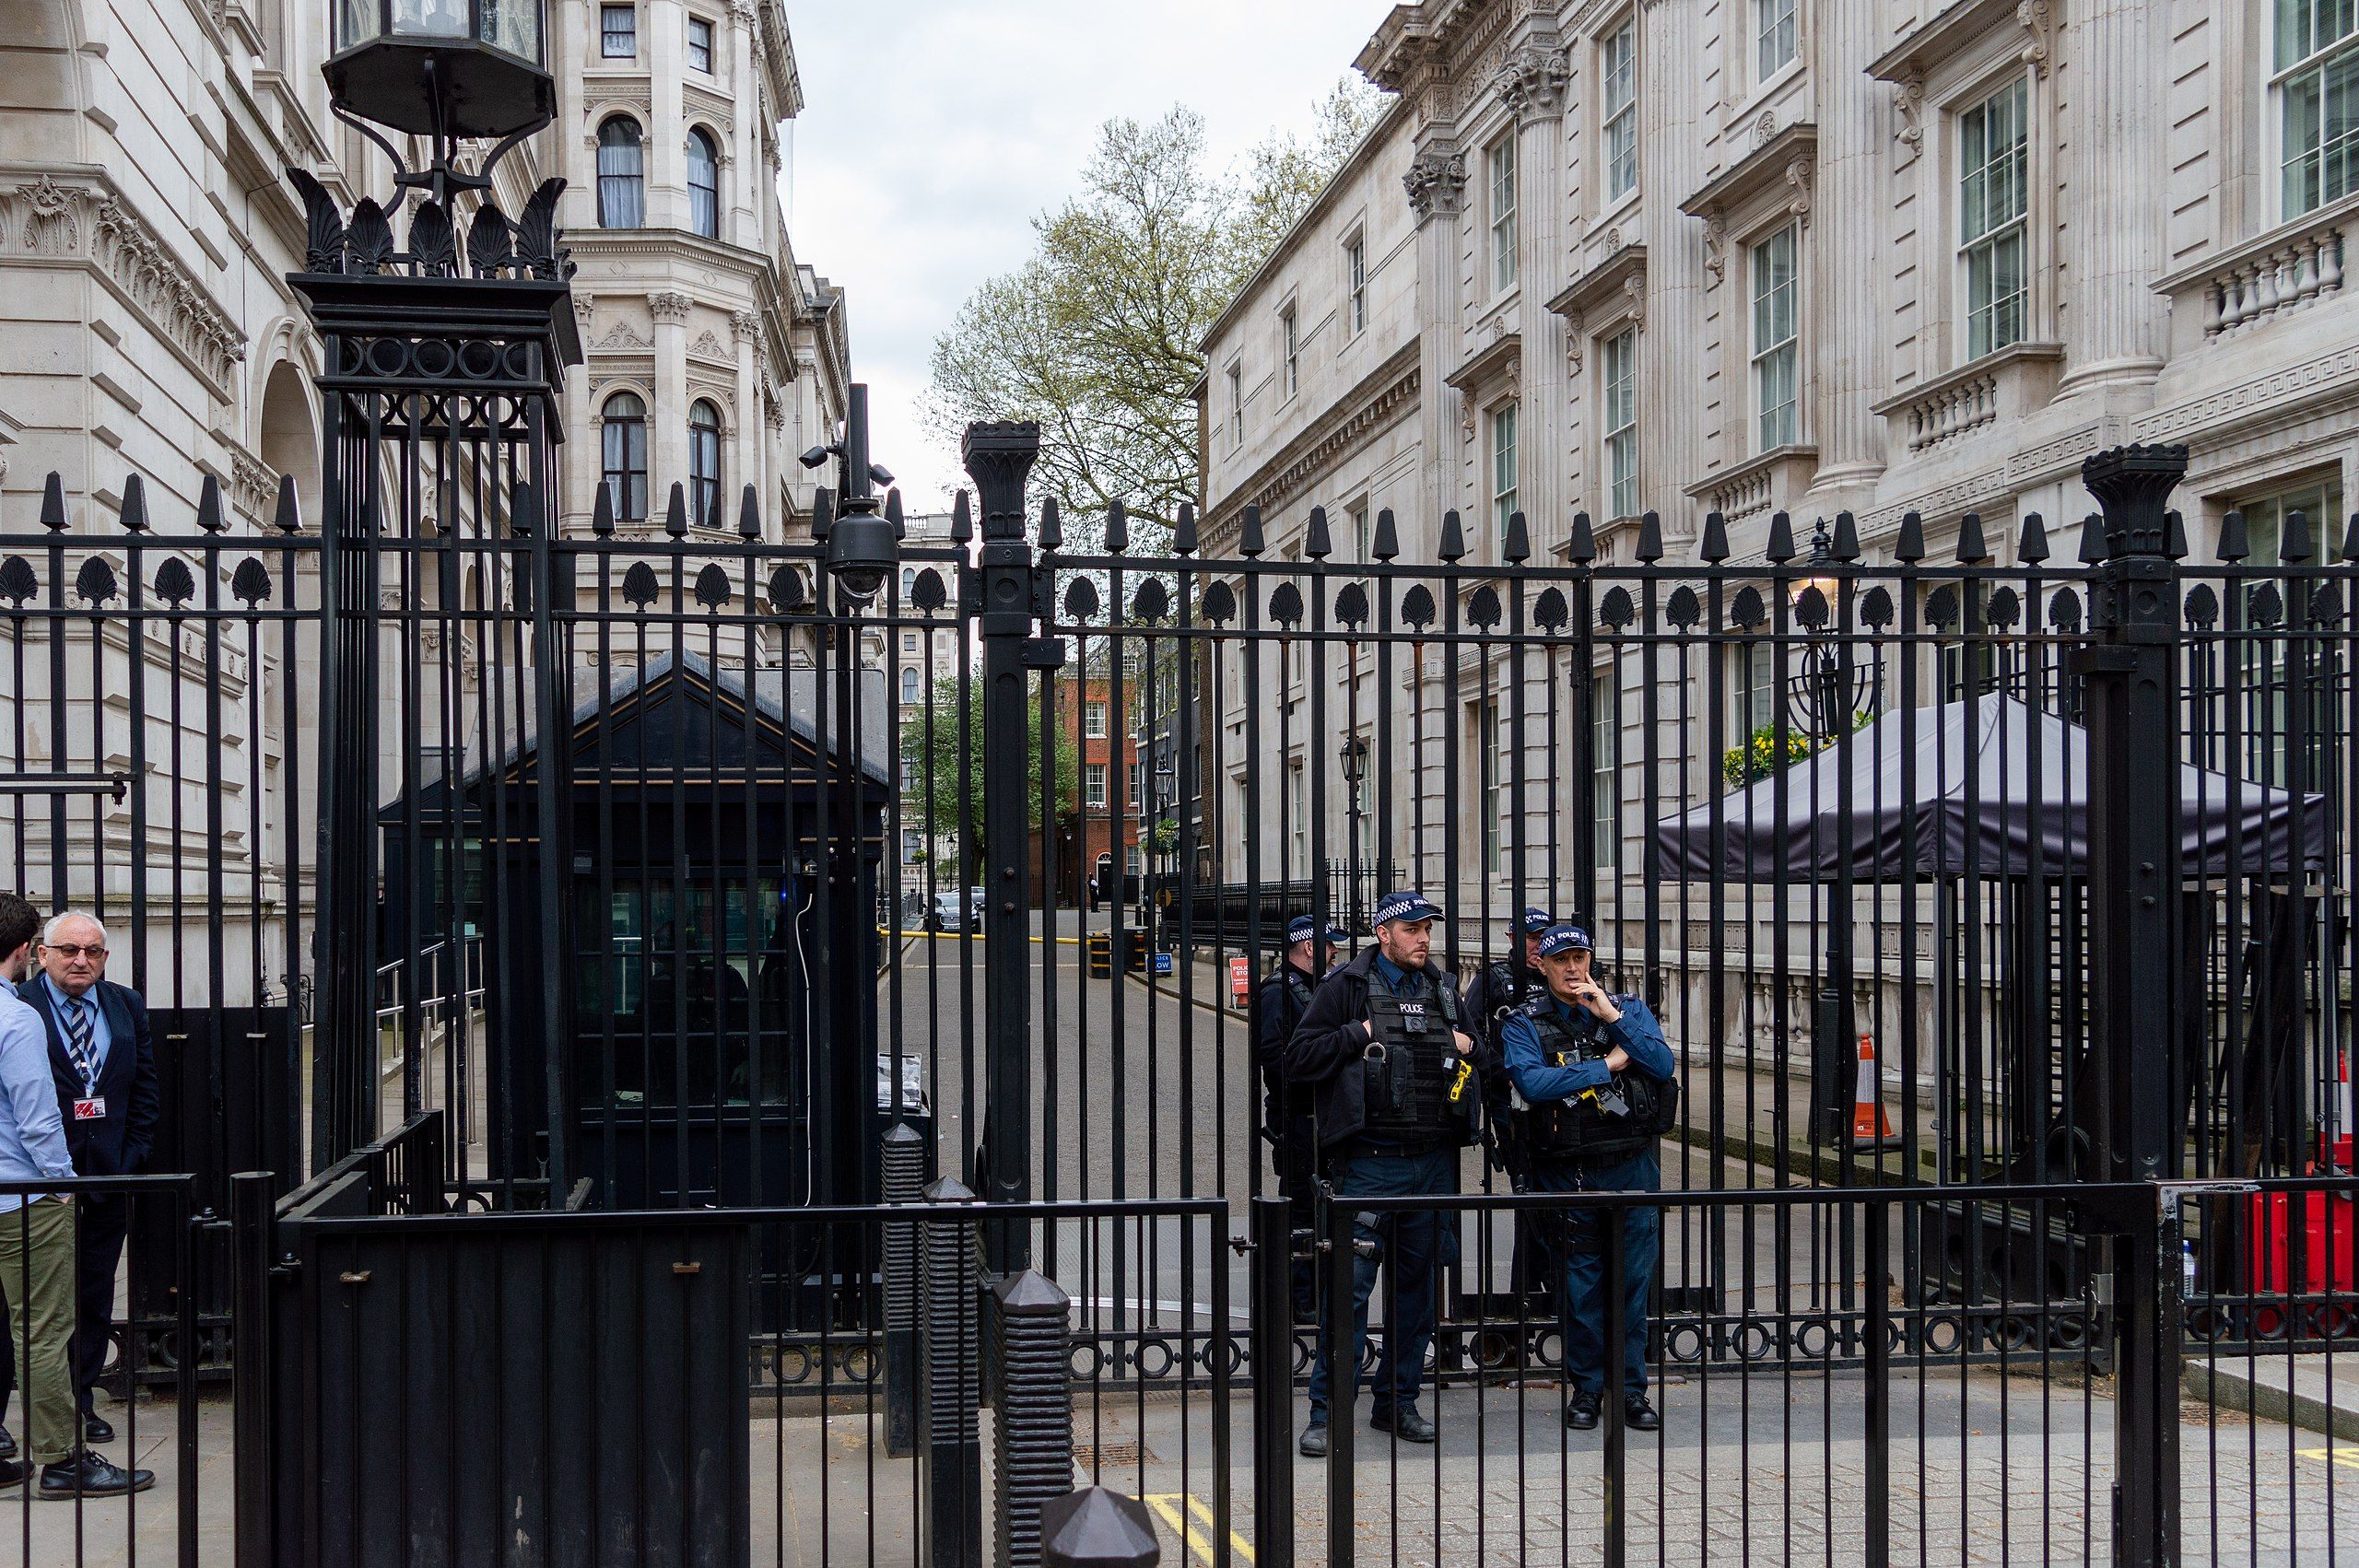 Downing Street gates, London